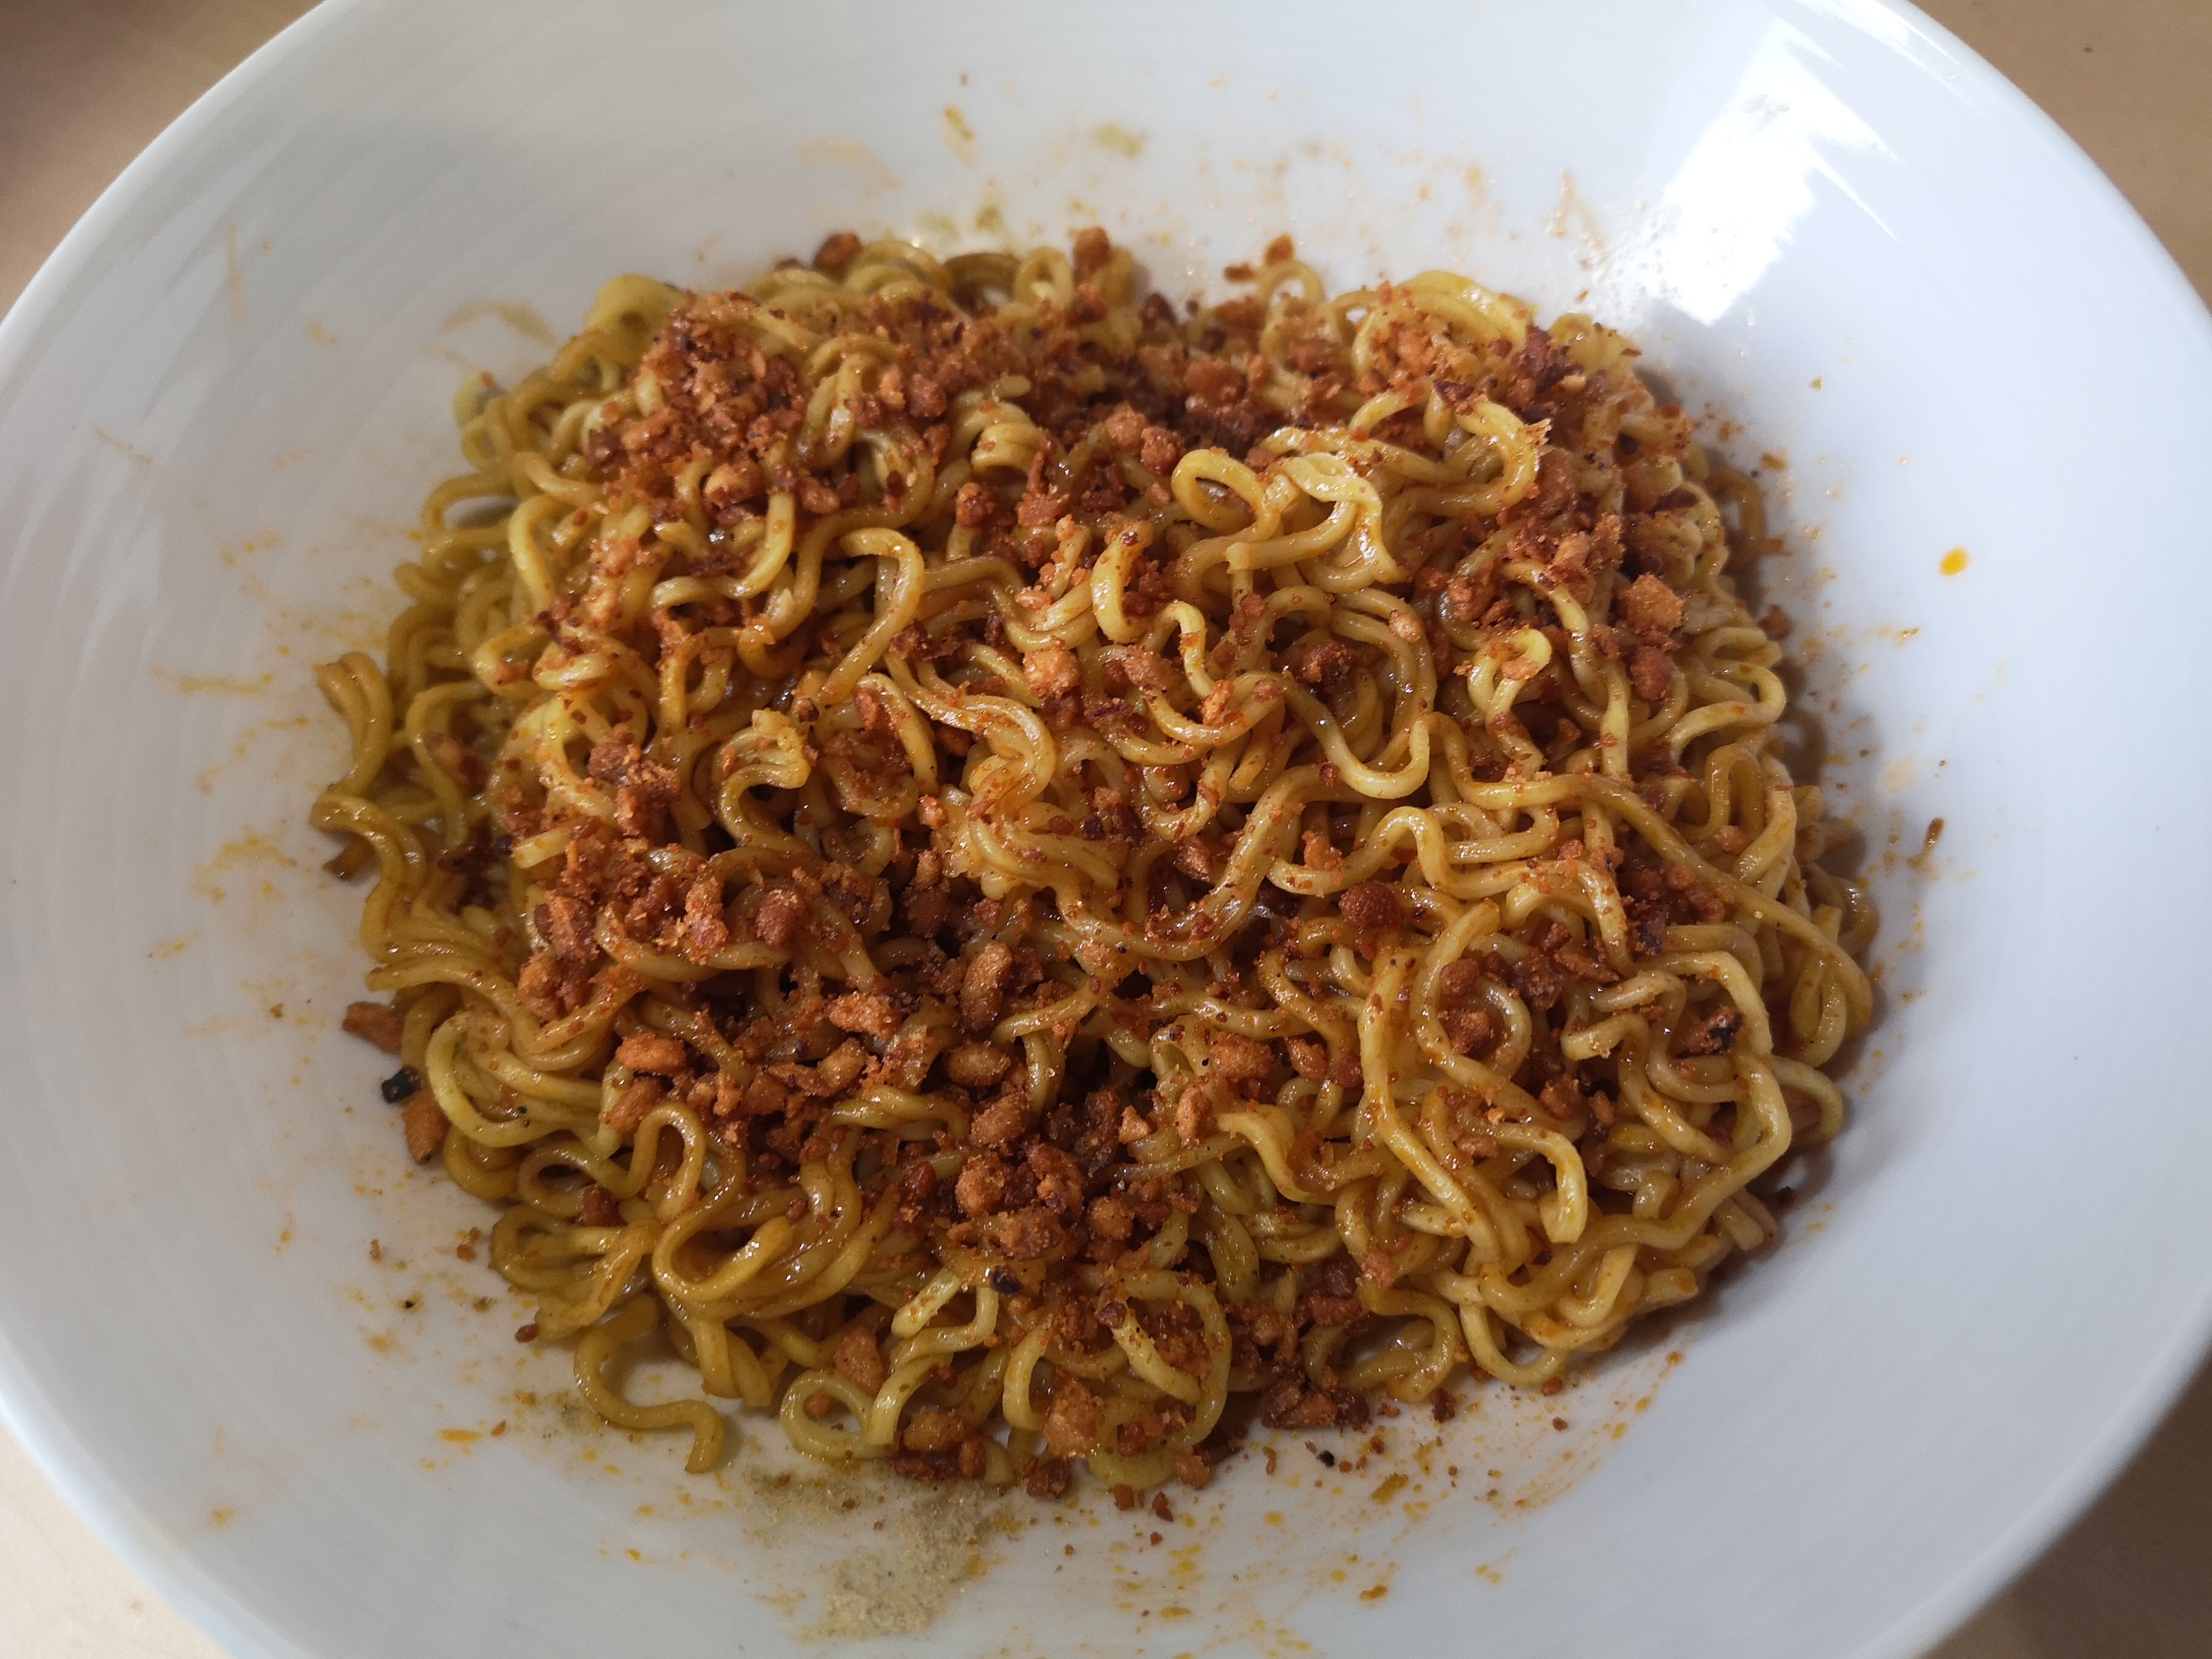 #2168: Wingsfood "Mi Sedaap Favourite Mi Goreng Perisa Sambal" (Instant Fried Noodles Hot & Spicy Flavour)